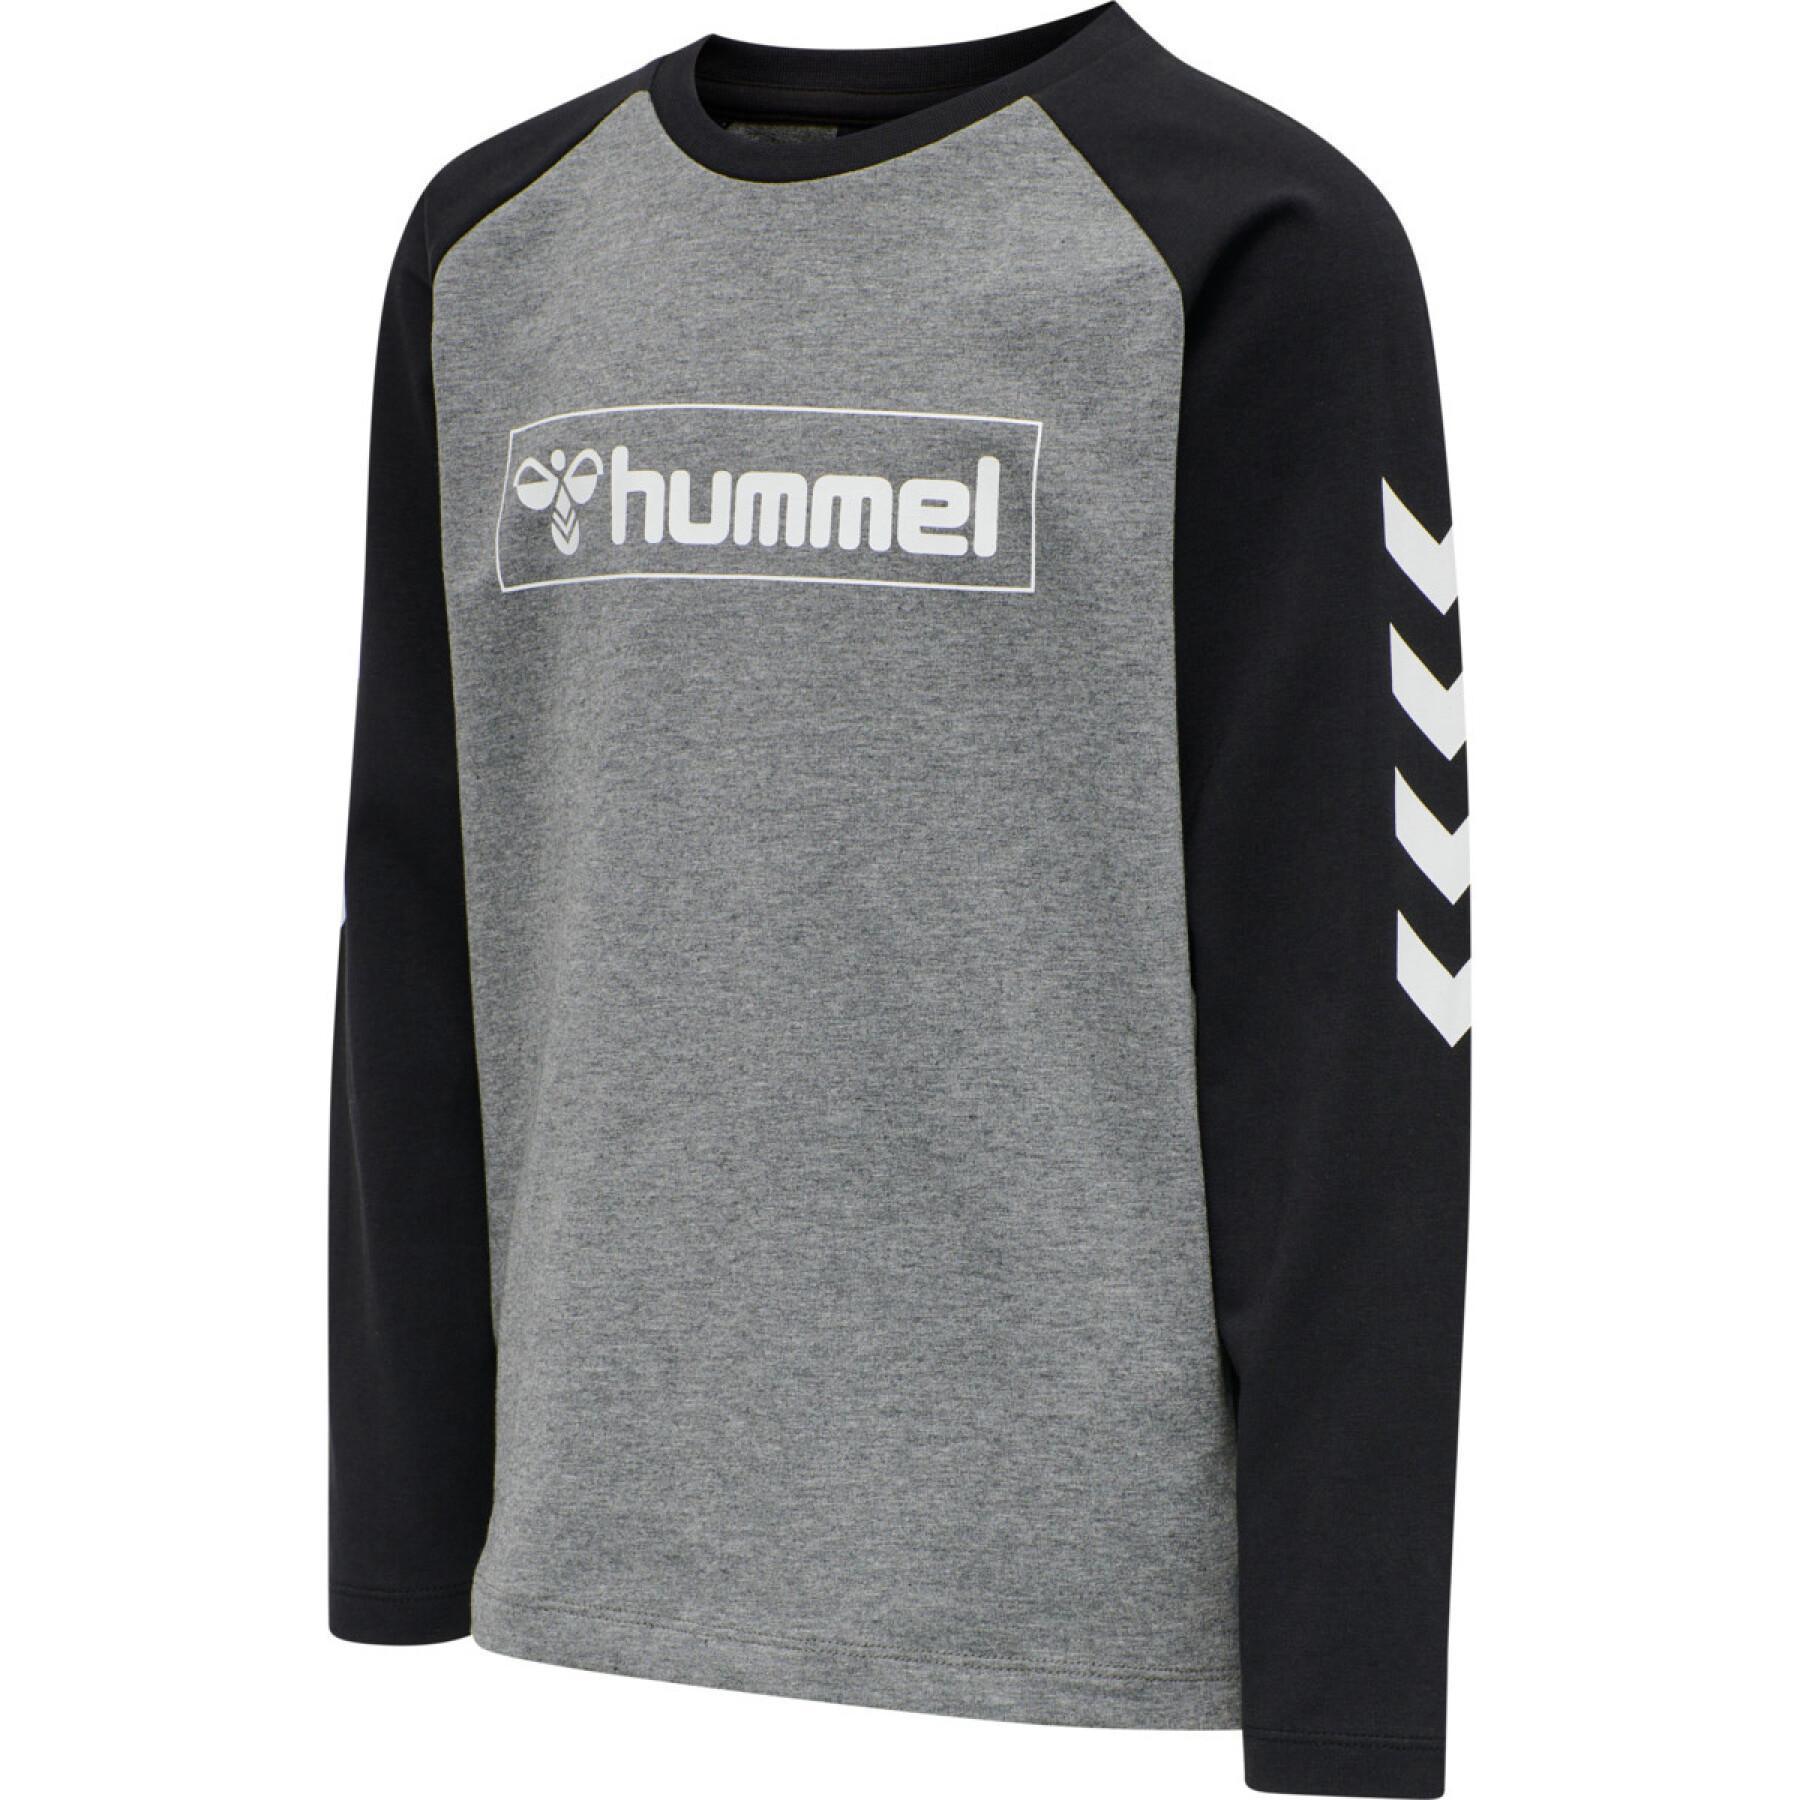 Kinder sweatshirt Hummel hmlBOX